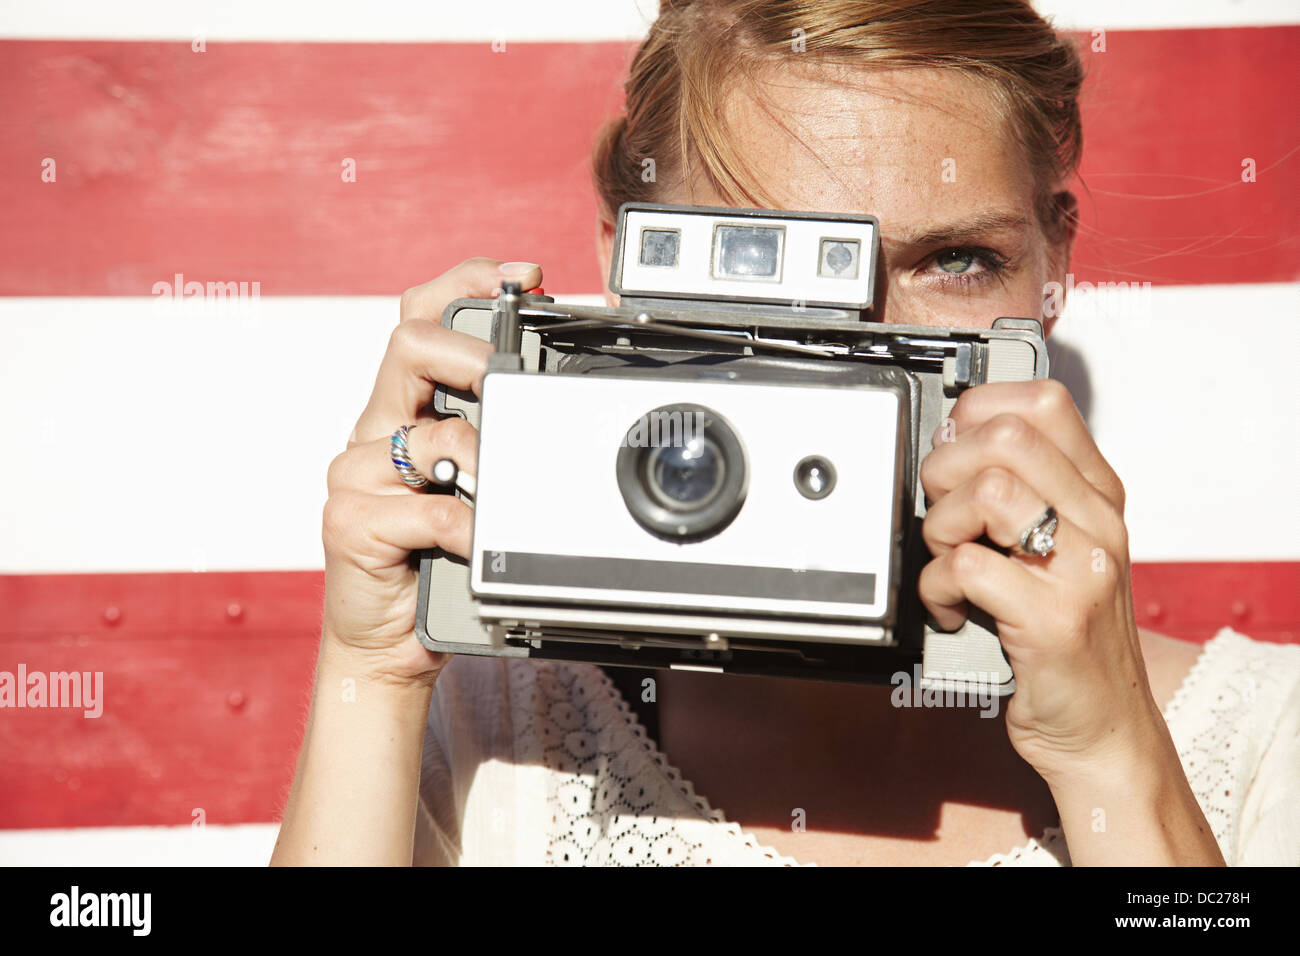 Woman taking photograph using vintage camera Stock Photo